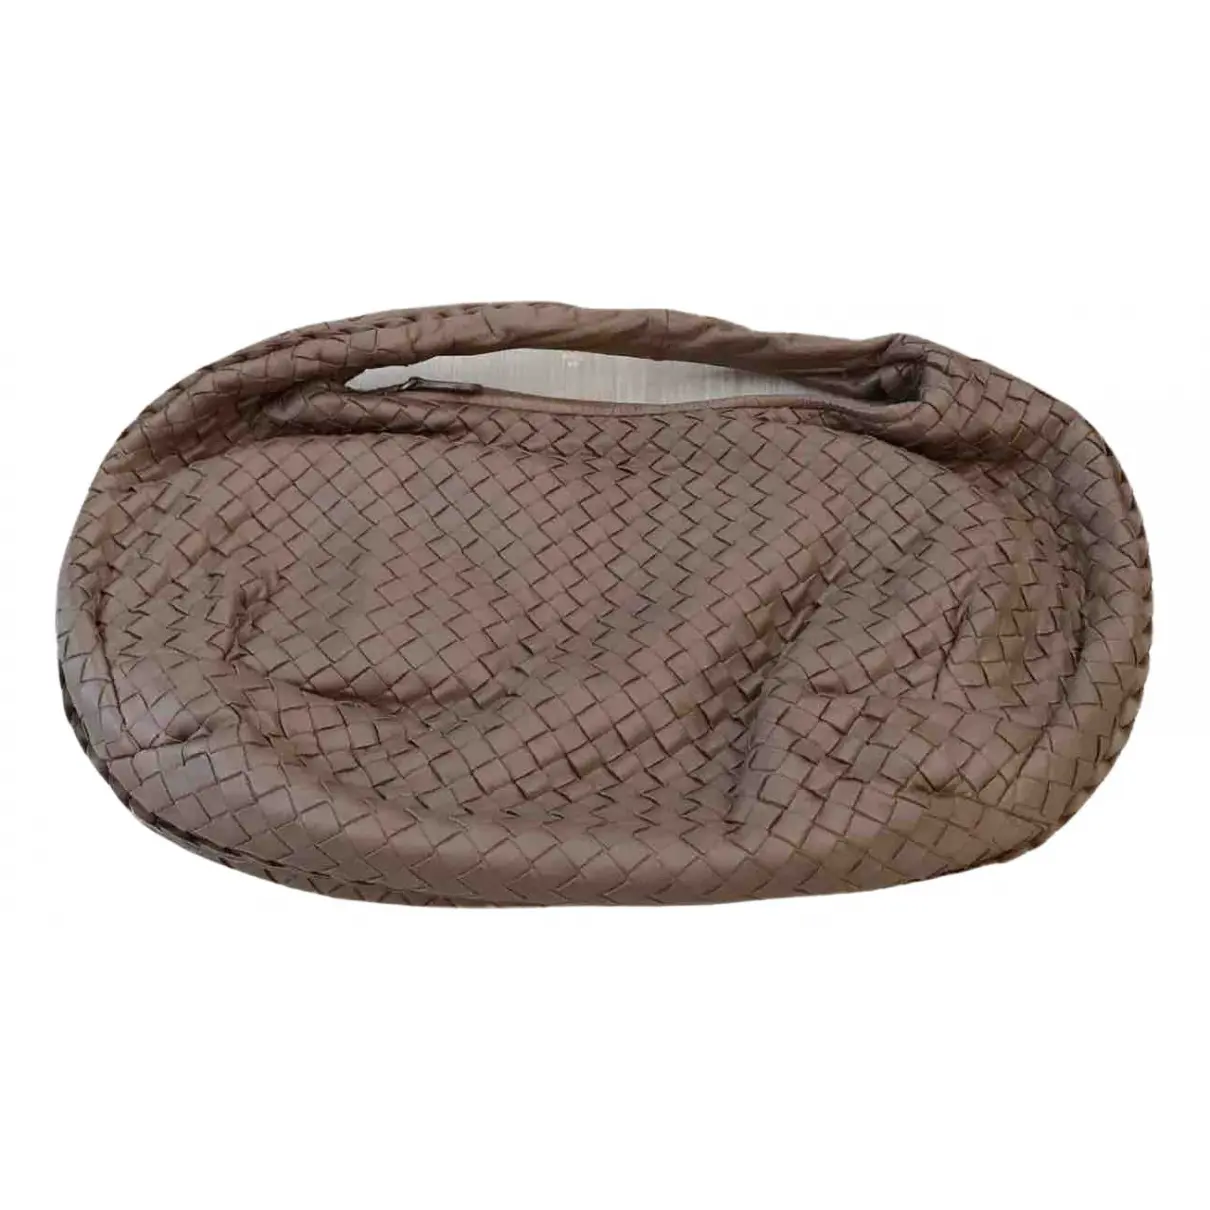 Veneta leather handbag Bottega Veneta